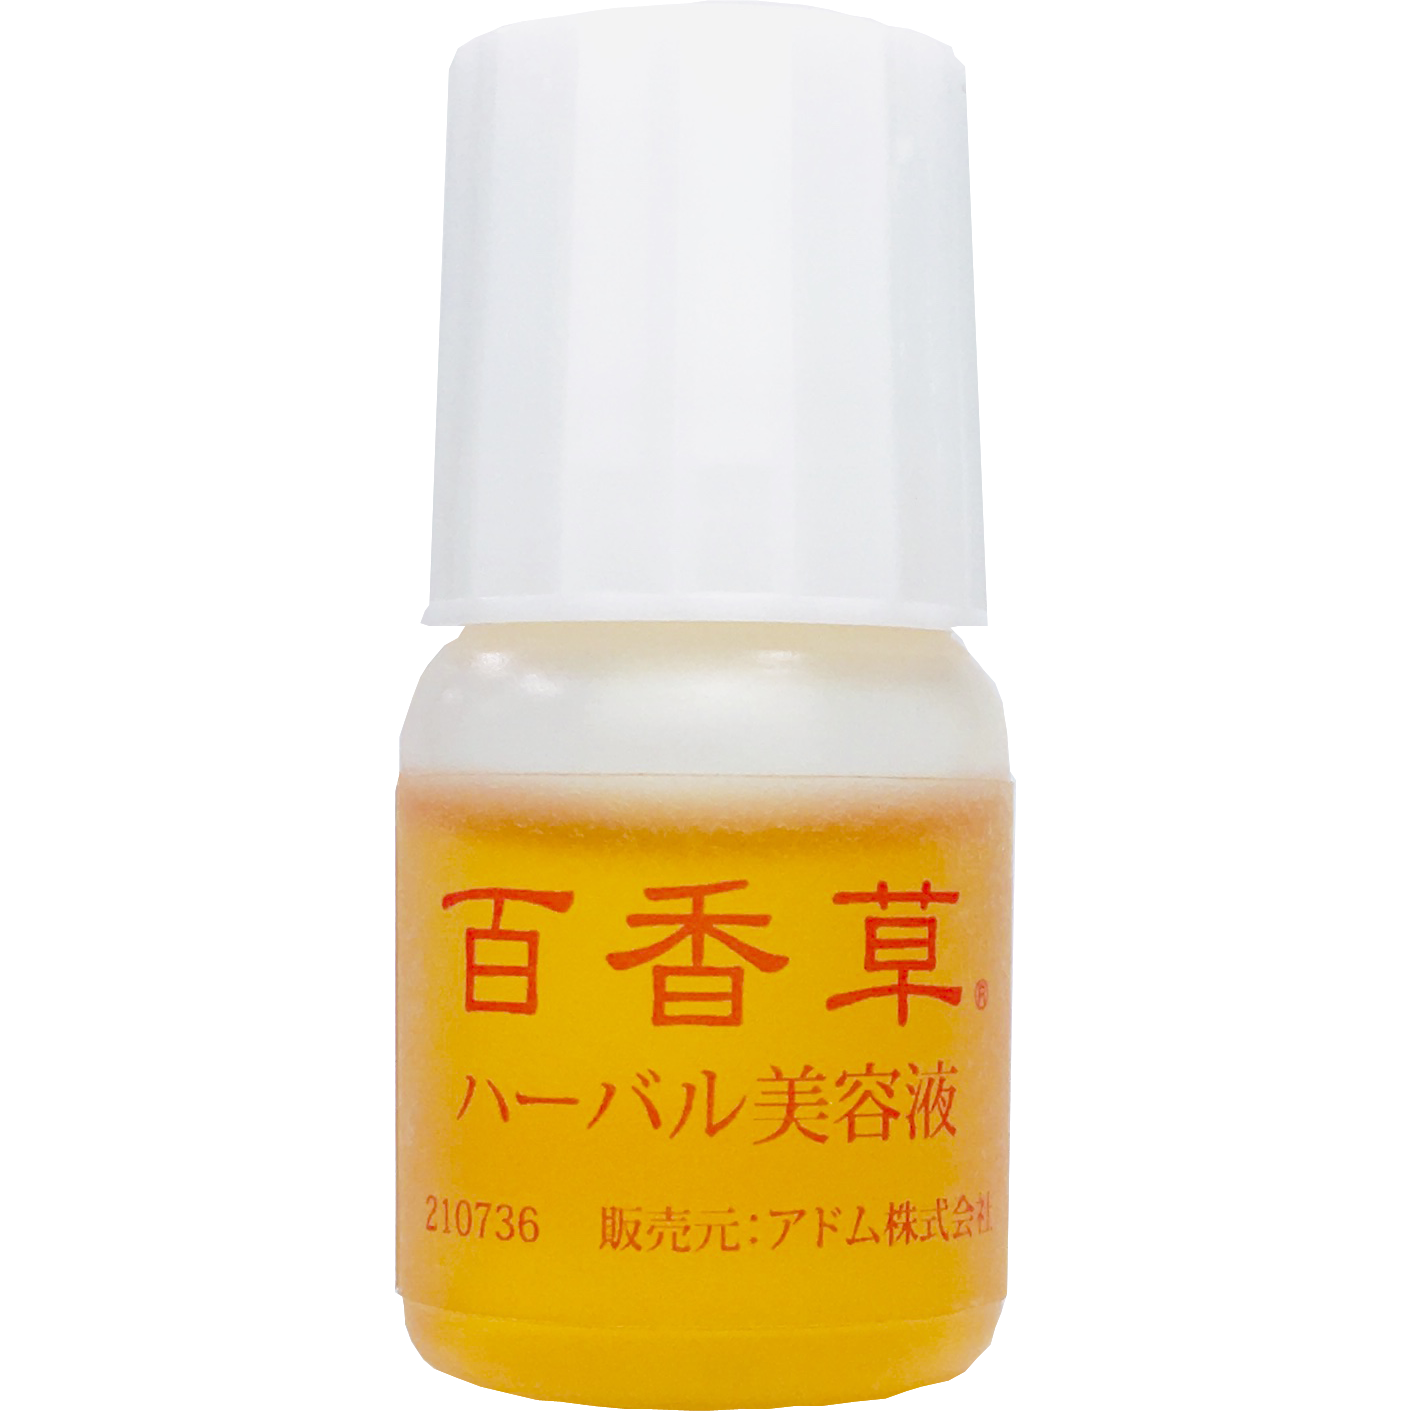 Hyakkaso [Beauty Routine Essential] trial set adom2.